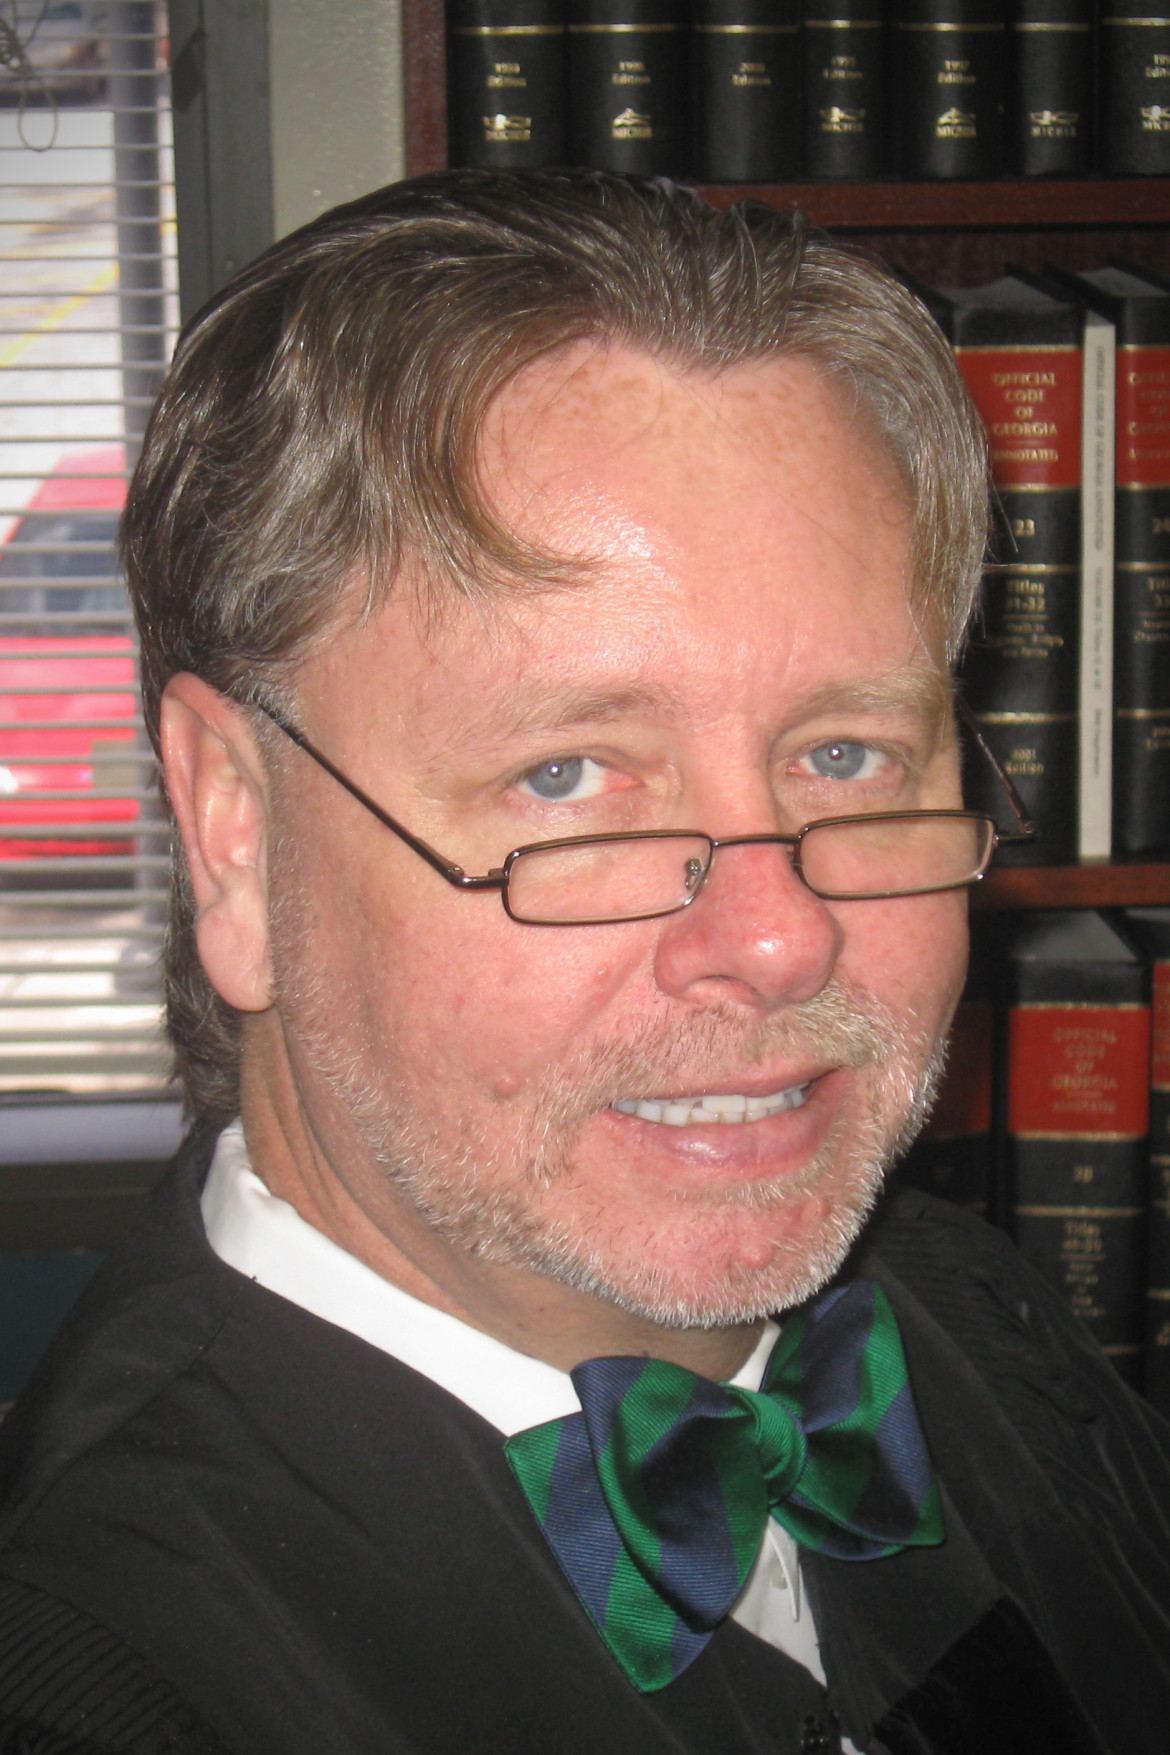 OJJDP: Judge Steven Teske (headshot), man with beard and mustache, black robe, blue and green bowtie